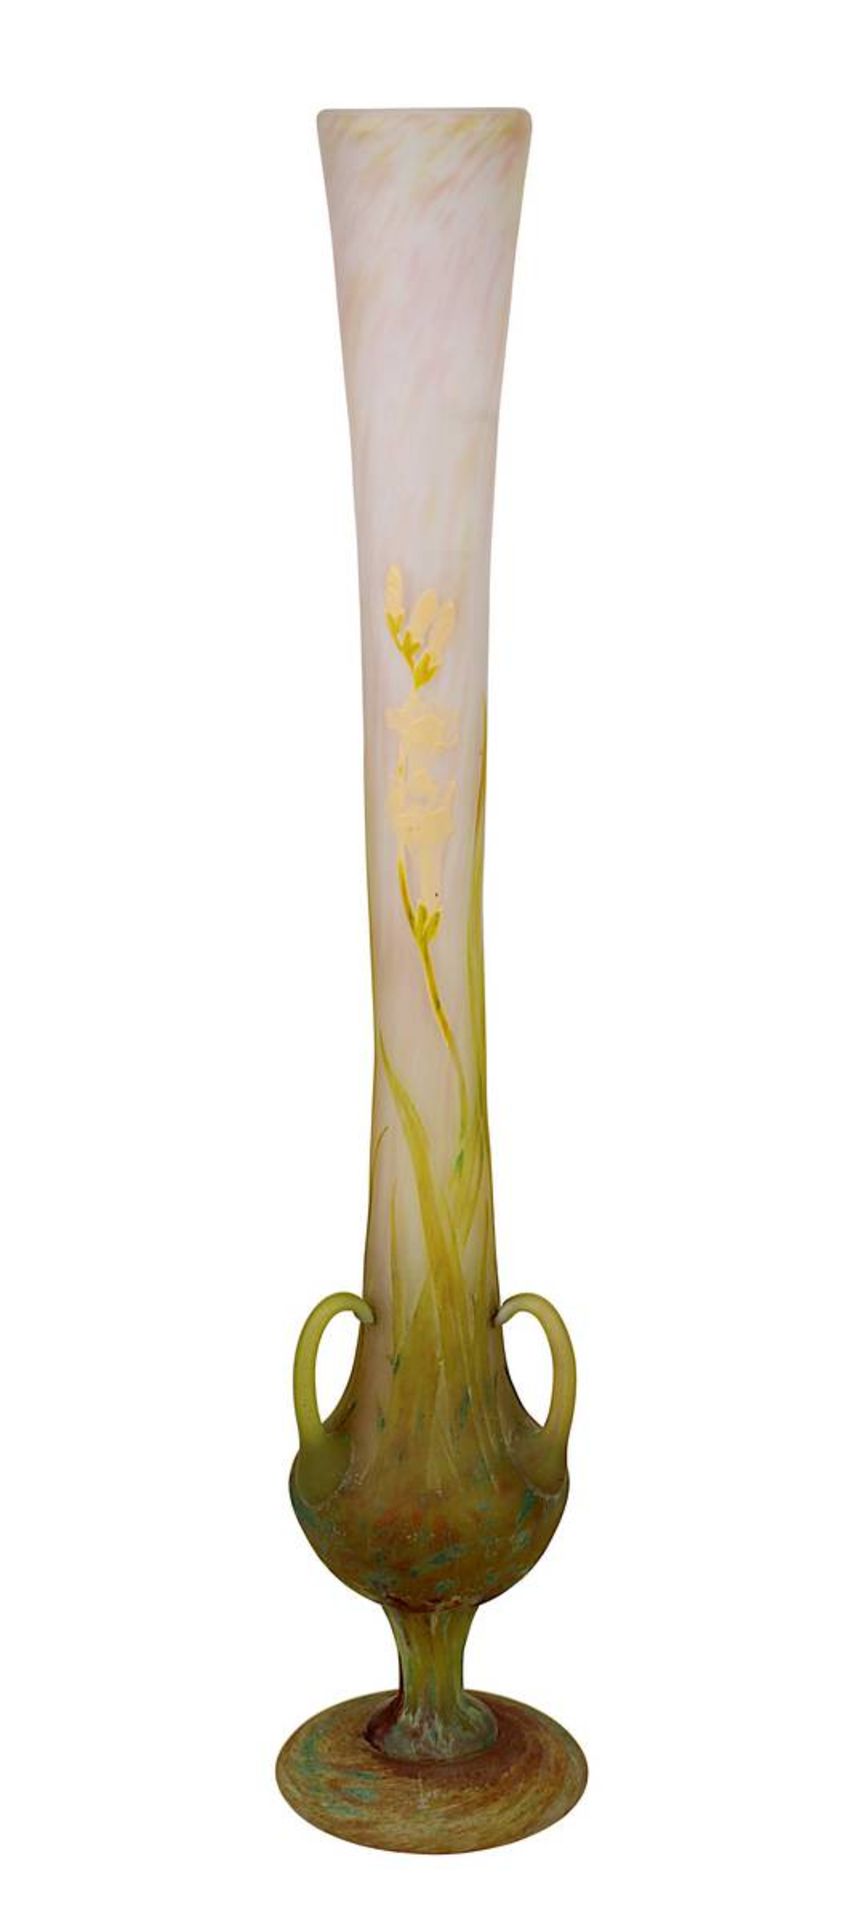 Daum Jugendstil-Vase Freesias, Nancy 1910 - 12, Entwurf wohl Henry Bergér, Luxusglas-Serie, Modell